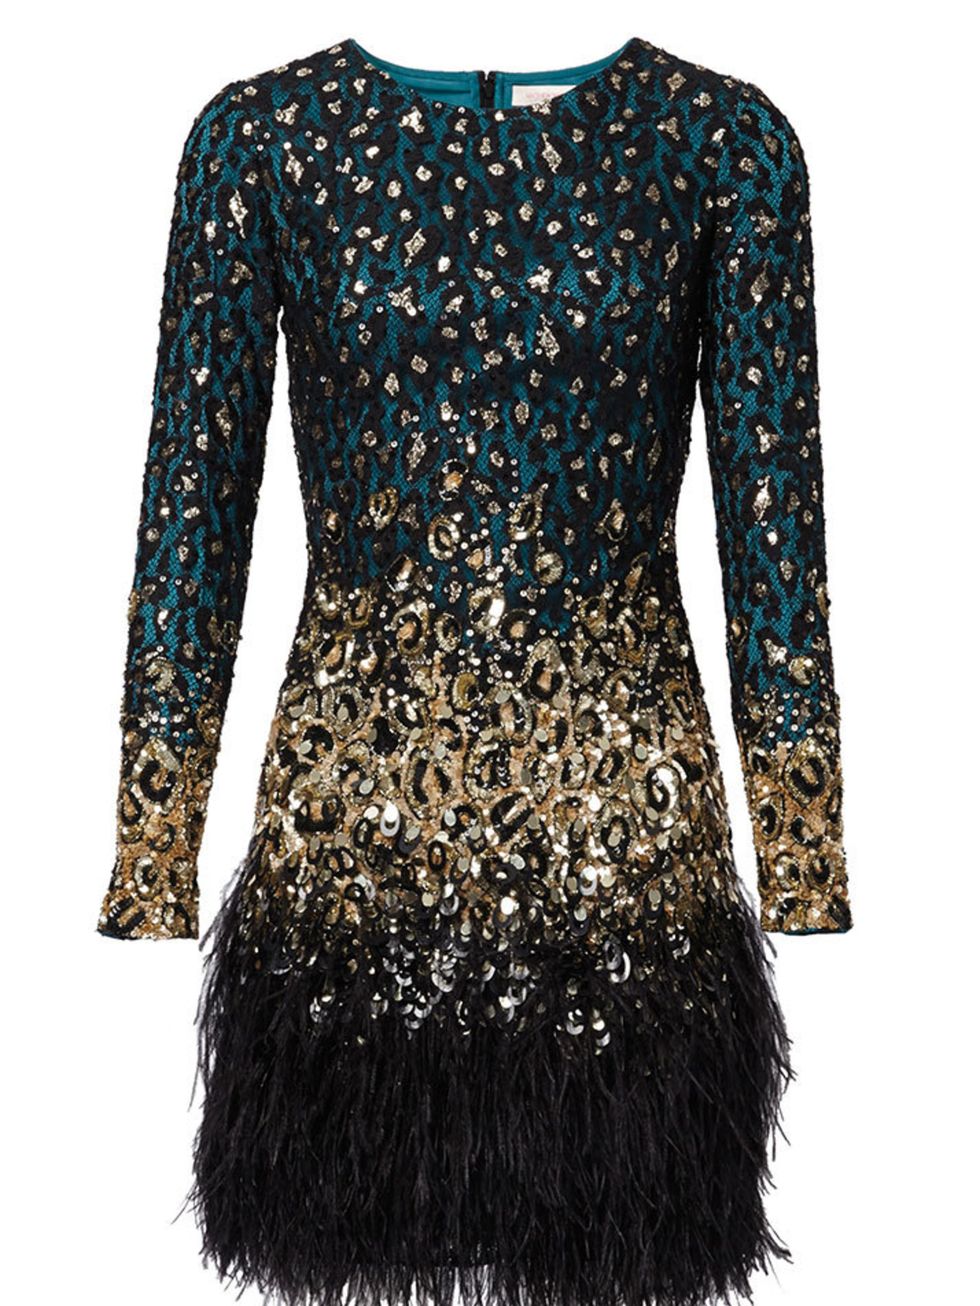 <p>Jade Leopard Lace Feather Dress,</p>

<p><a href="http://www.matthewwilliamson.com/shop/product/8974/luxury-leopard-lace-party-dress">Buy online</a></p>